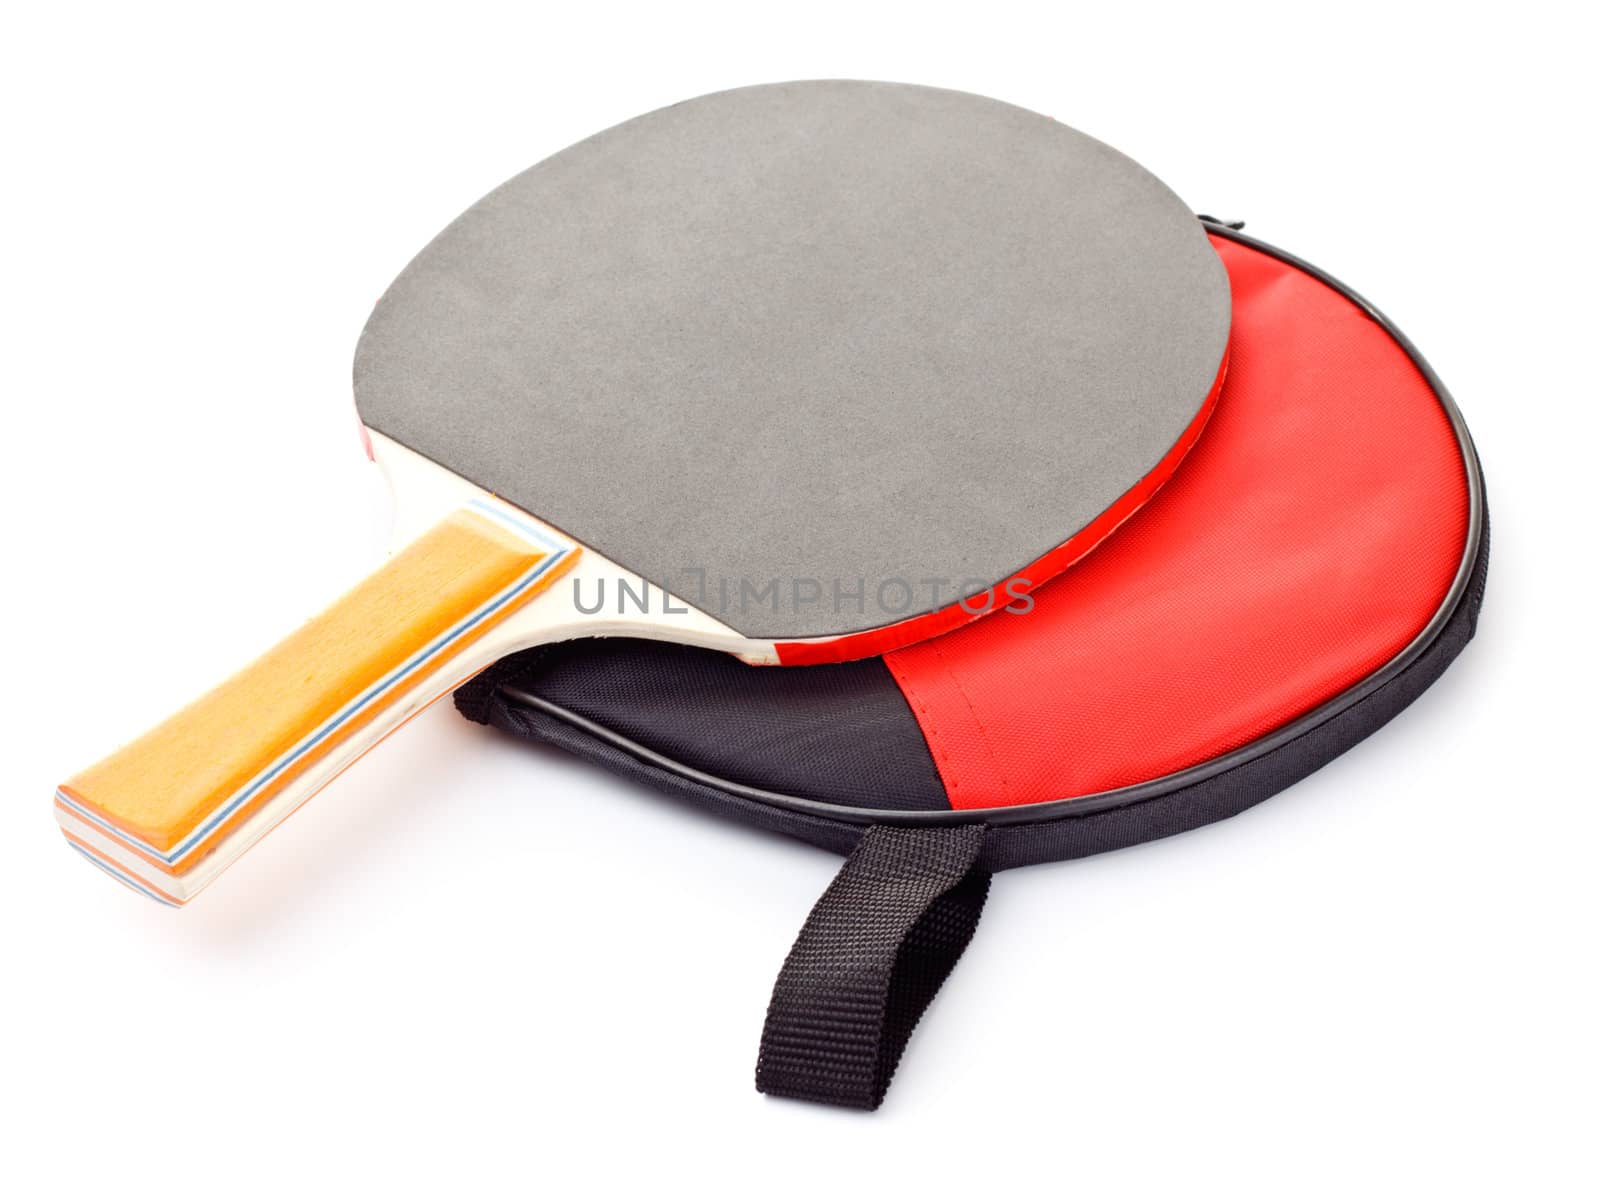 table tennis racket by petr_malyshev